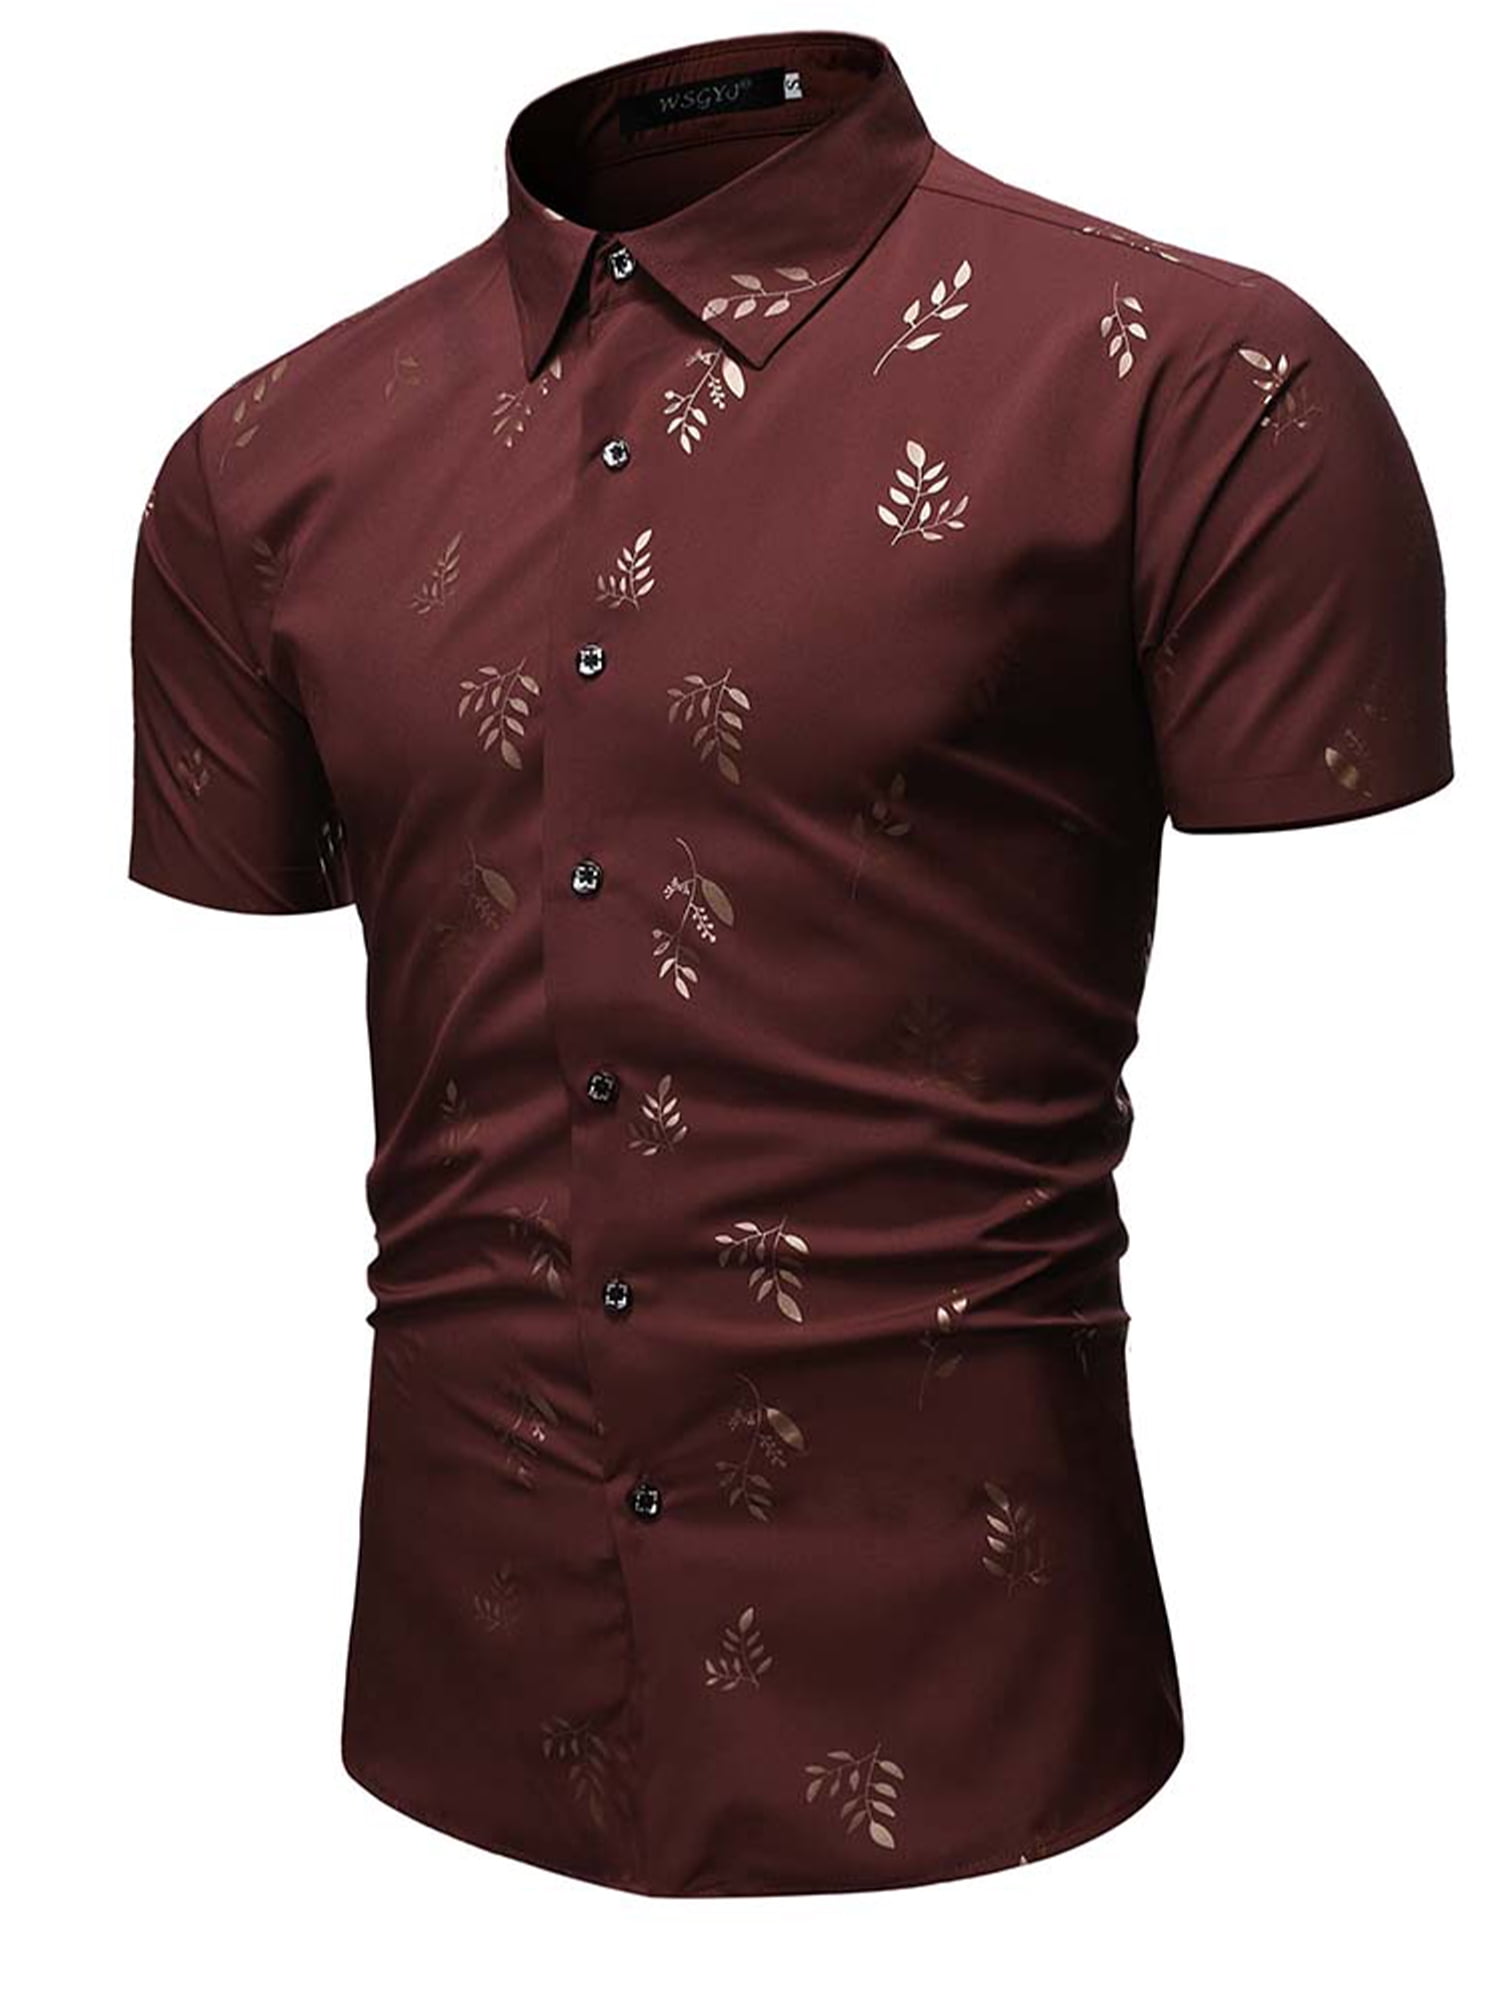 AODEW Mens Slim Fit Dress Shirt Casual Shirt Fashion Long Sleeve Button Down Shirts